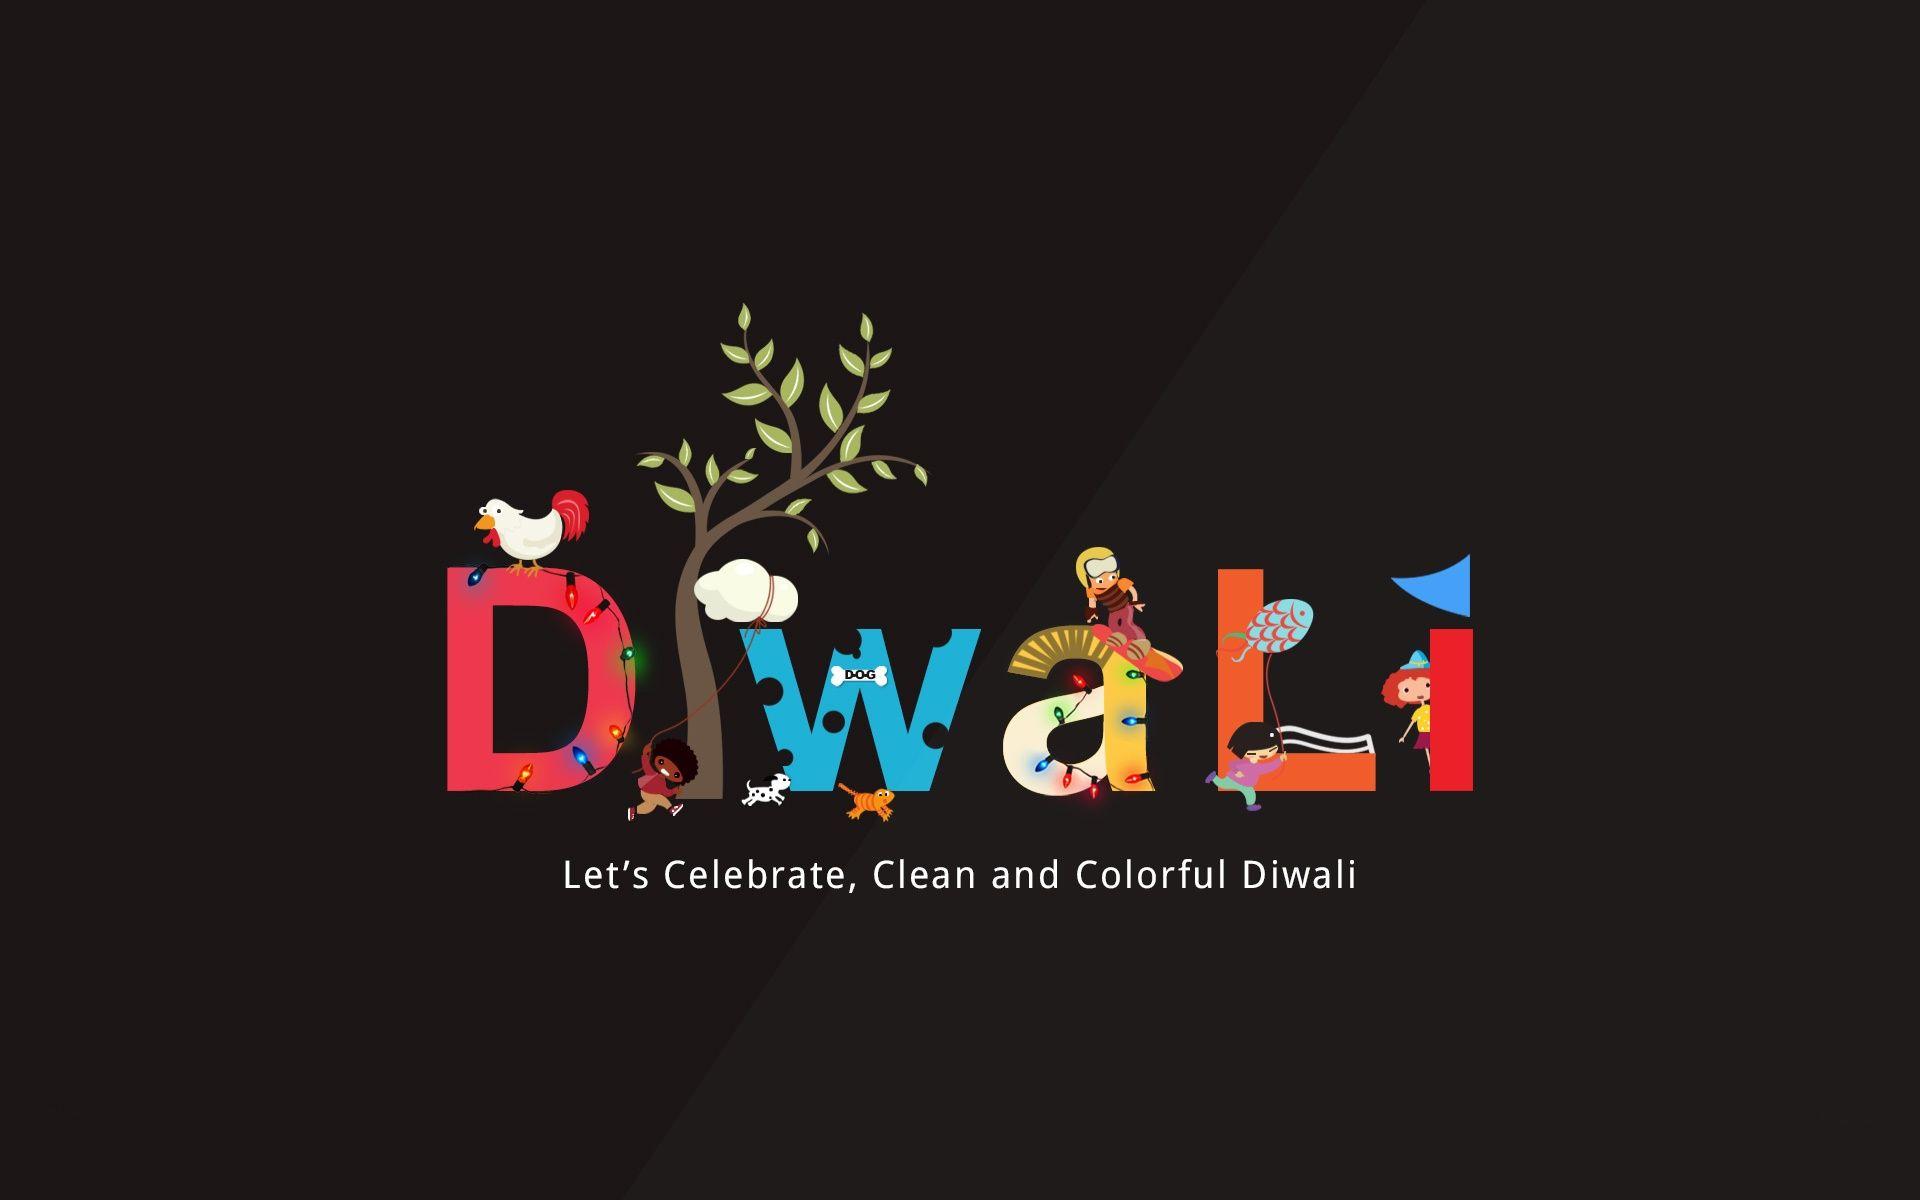 Happy Diwali Wallpaper in jpg format for free download